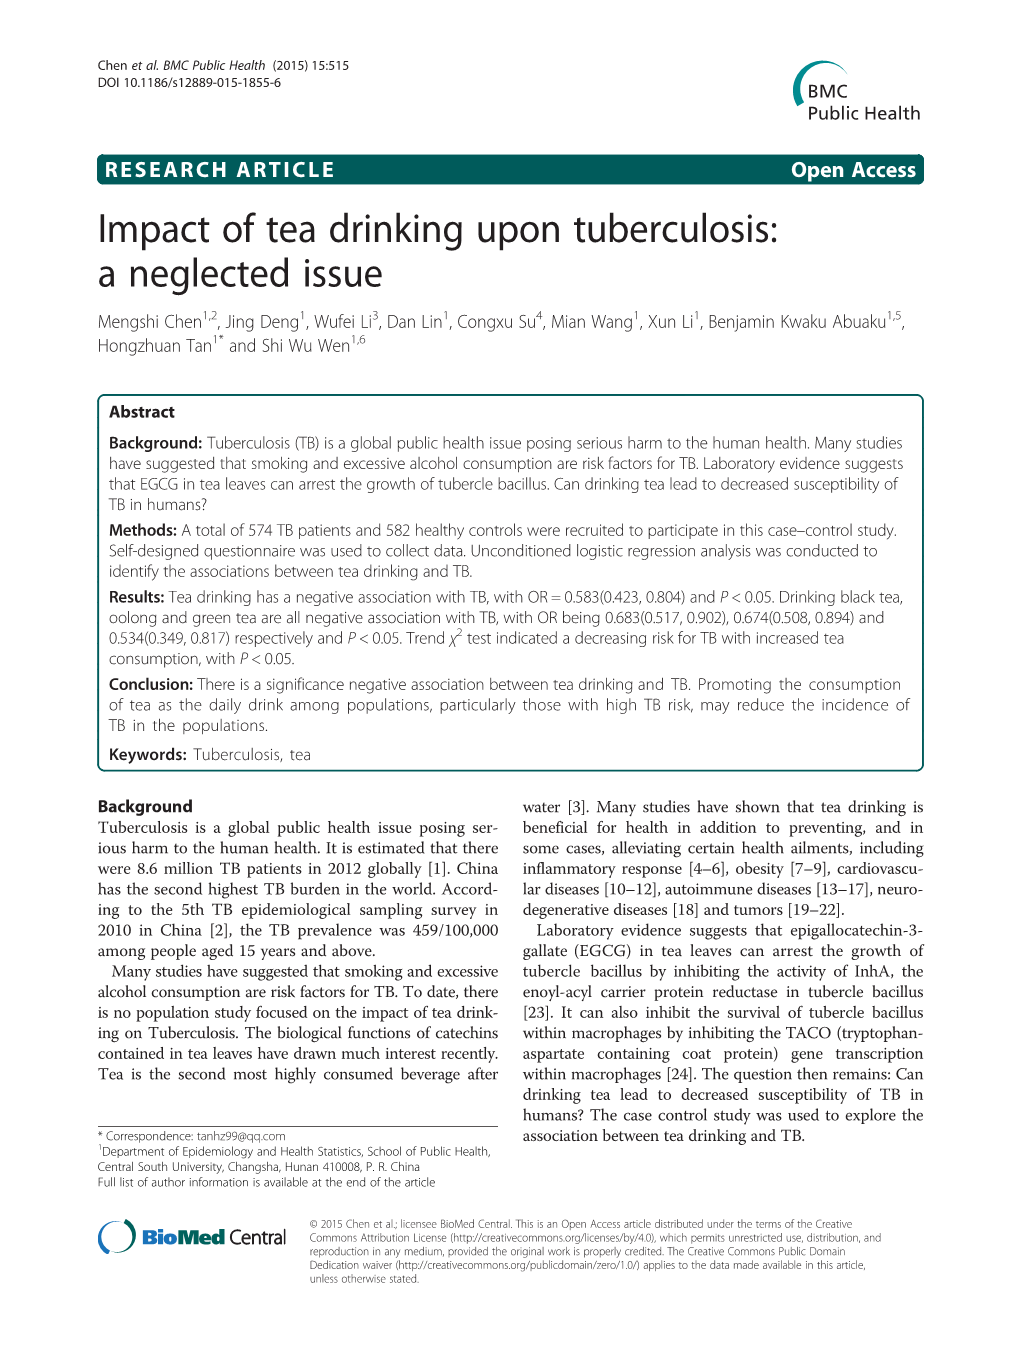 Impact of Tea Drinking Upon Tuberculosis